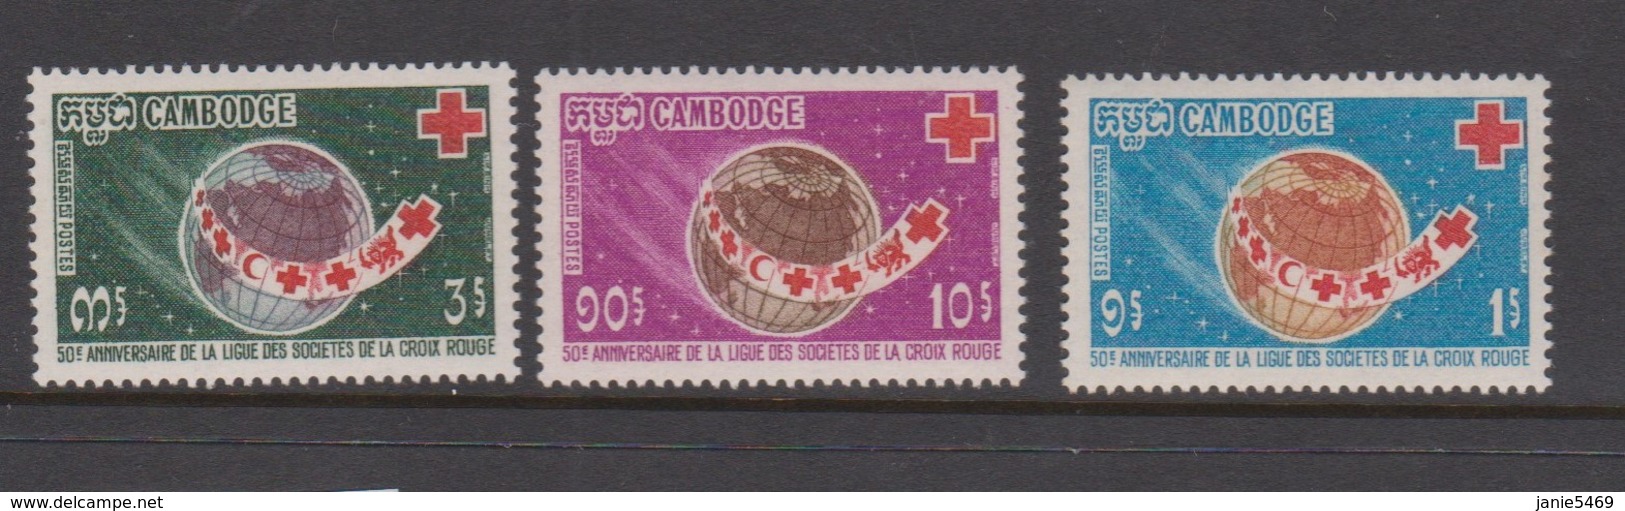 Cambodia SG 246-248 1969 50th Anniversary Red Cross Societies ,mint Never Hinged - Cambodia